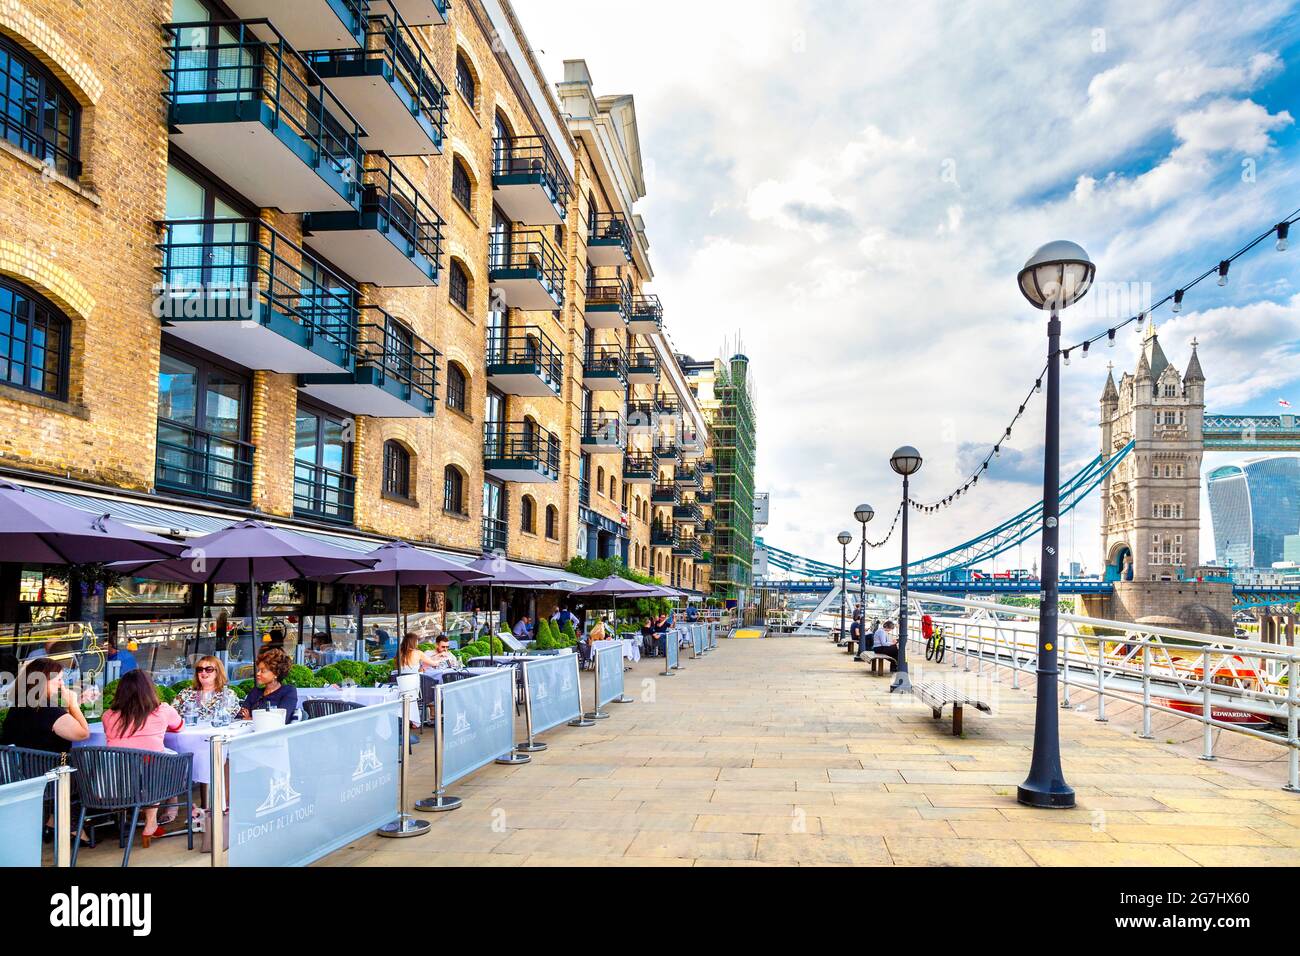 Riverside promenade and restaurants with al fresco seating along Butler's Wharf, Shad Thames, London, UK Stock Photo